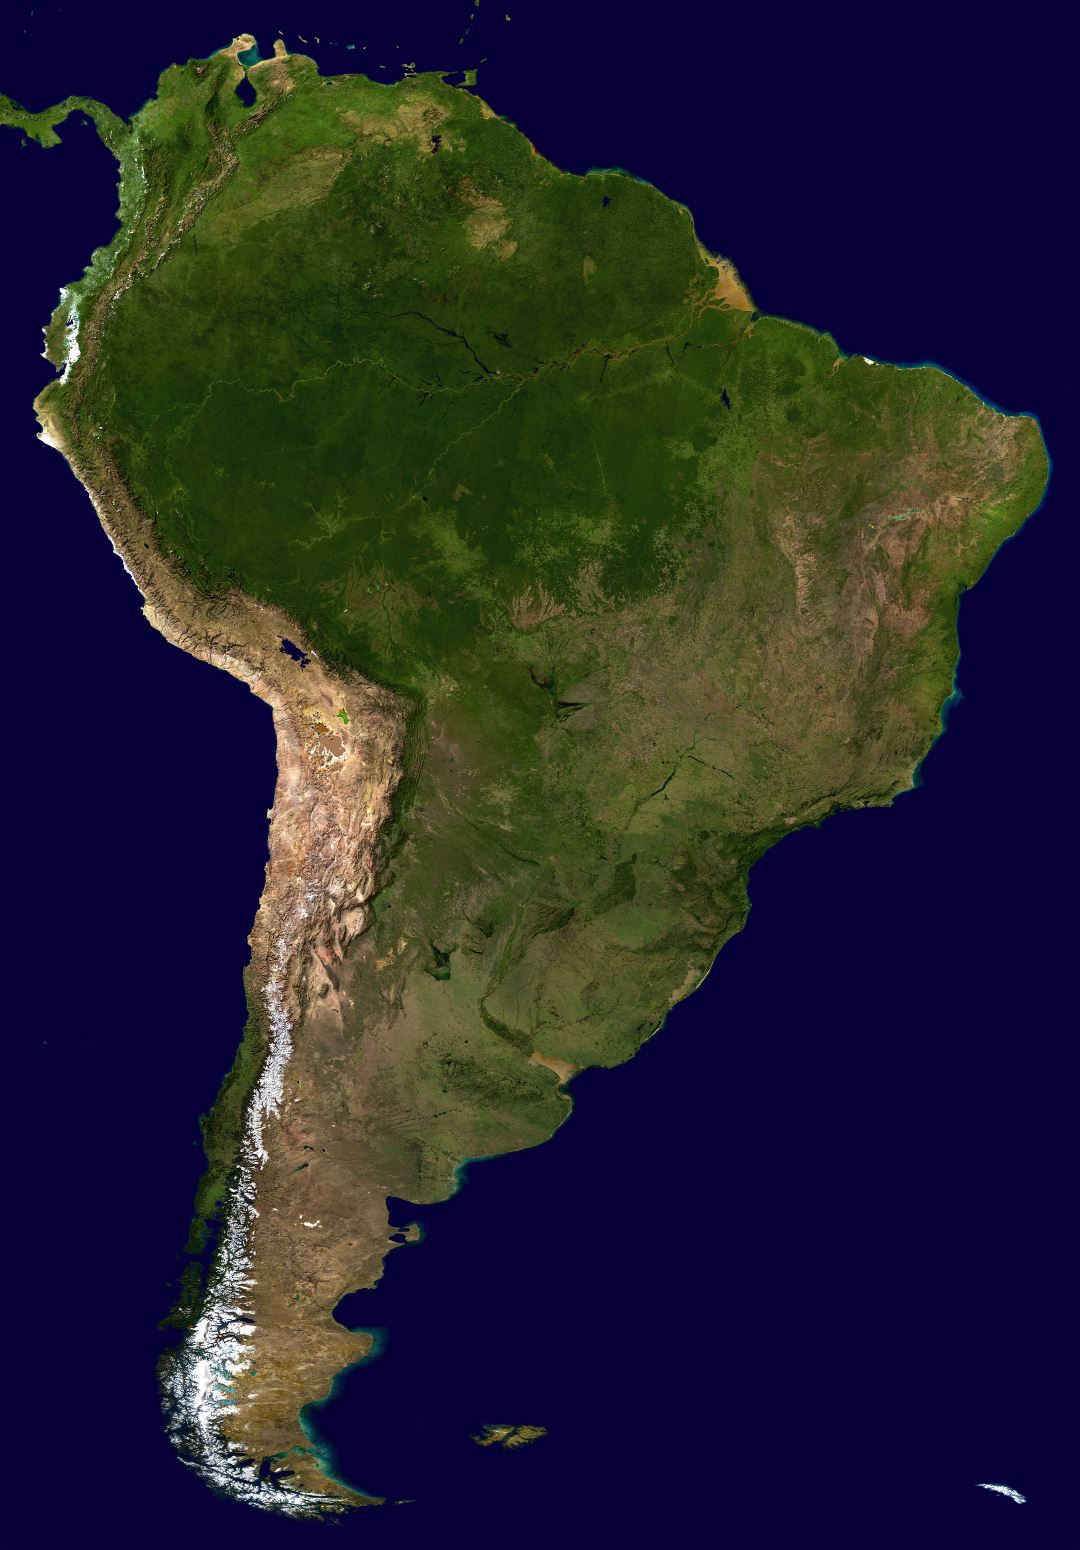 Mapa de satélite a gran escala de América del Sur